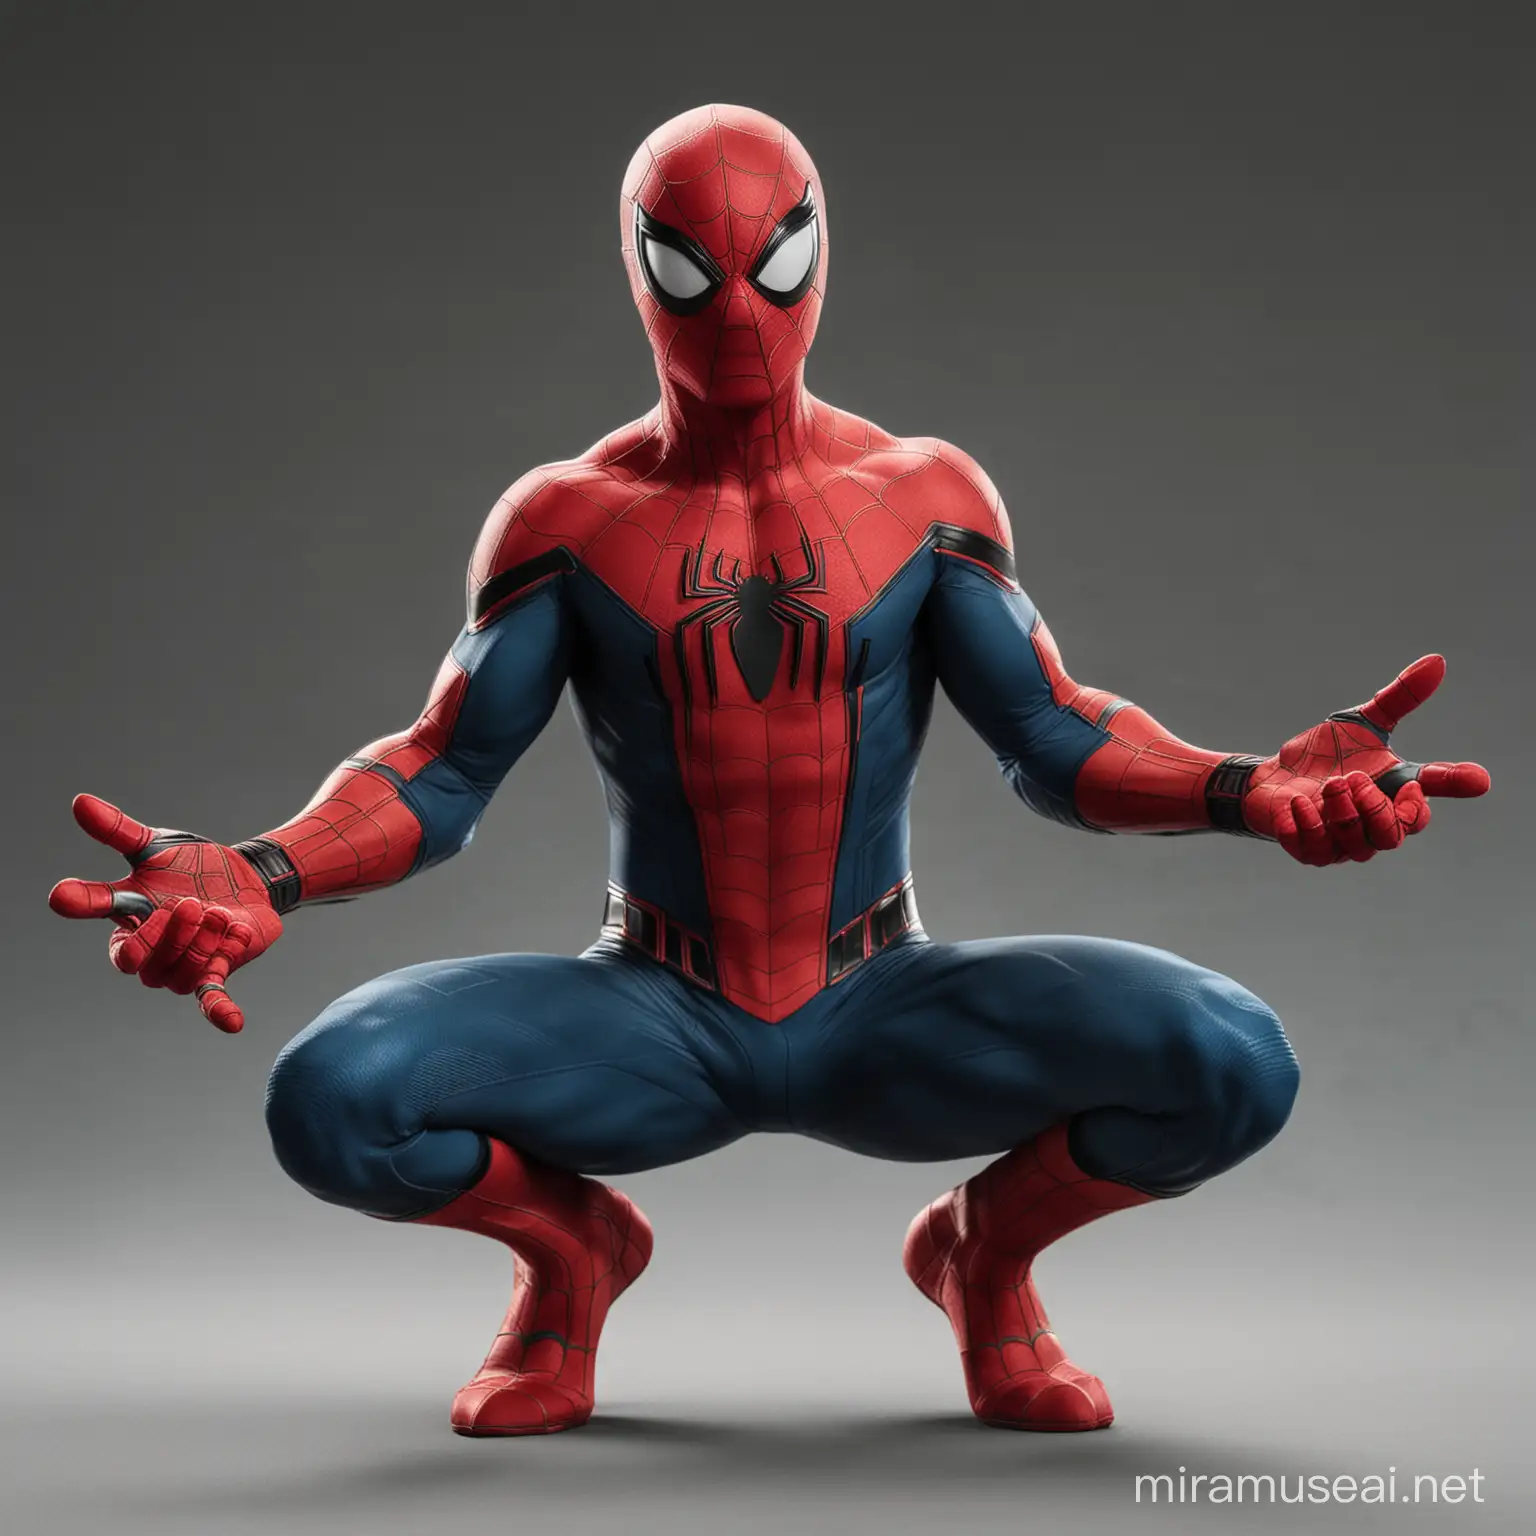 Superhero SpiderMan in a Casual FoldedArms Pose